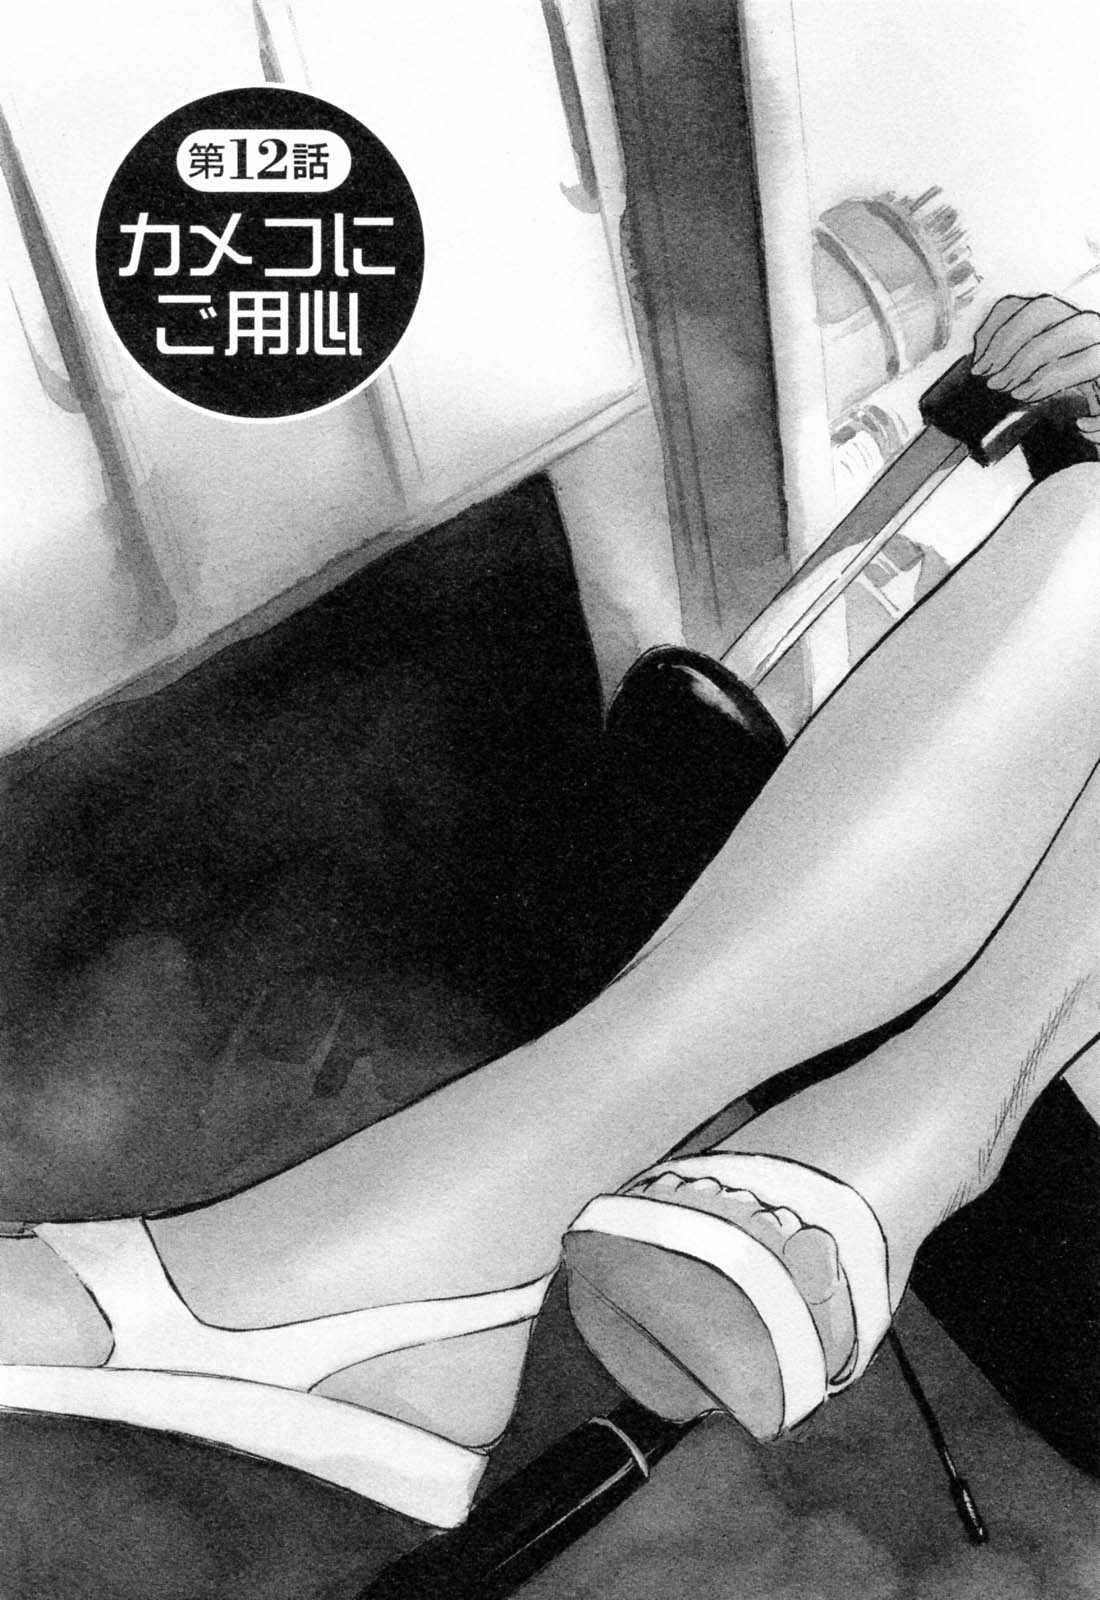 [Haduki Kaoru, Takazawa Hiroyuki] Joshi Ana Nanase 2 - Female Announcer NANASE 2 [ハ月薫、滝沢寛之] 女子アナ七瀬 2